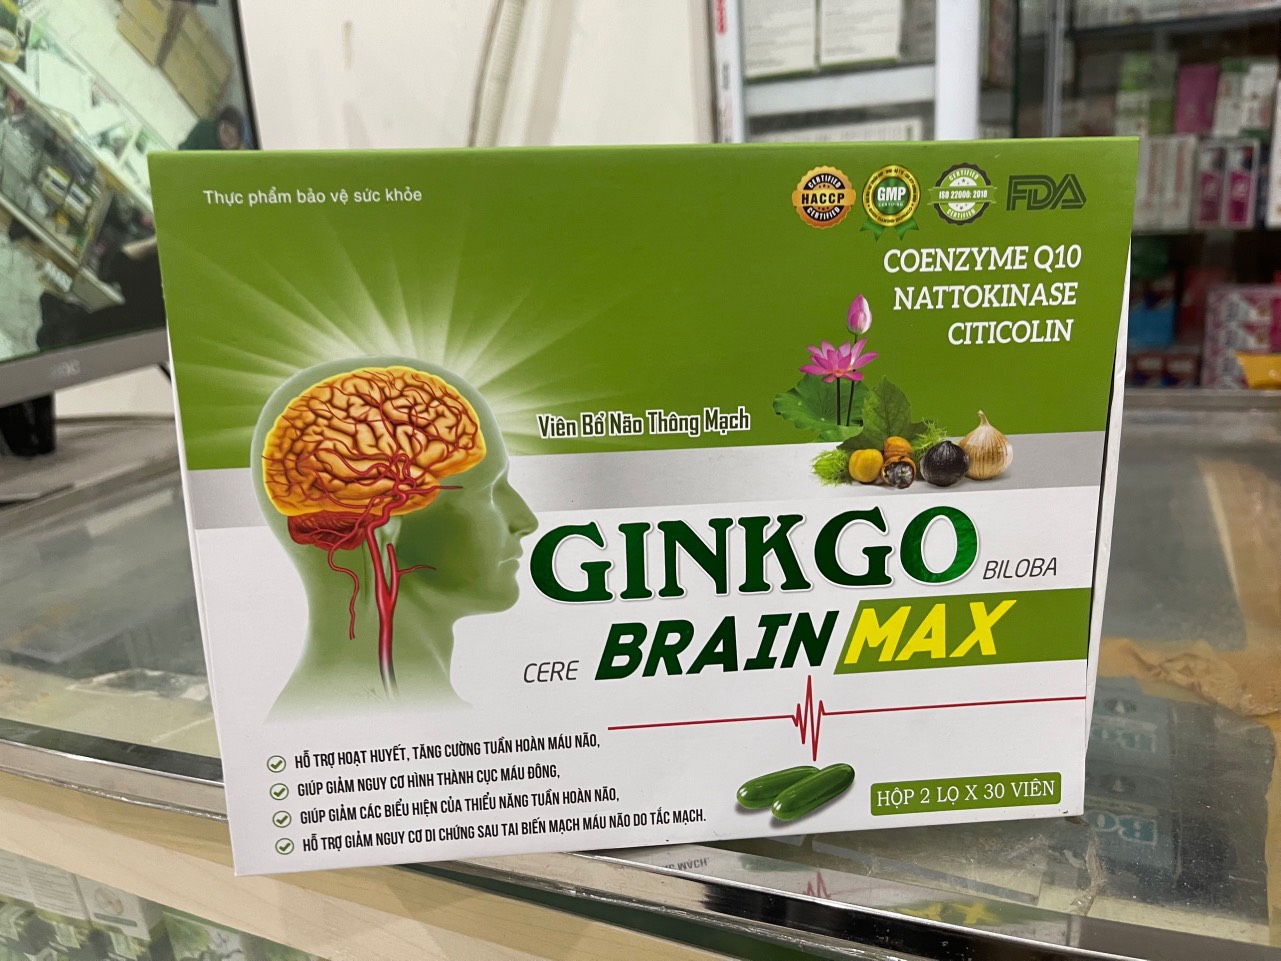 Ginkgo Biloba Cere Brain Max